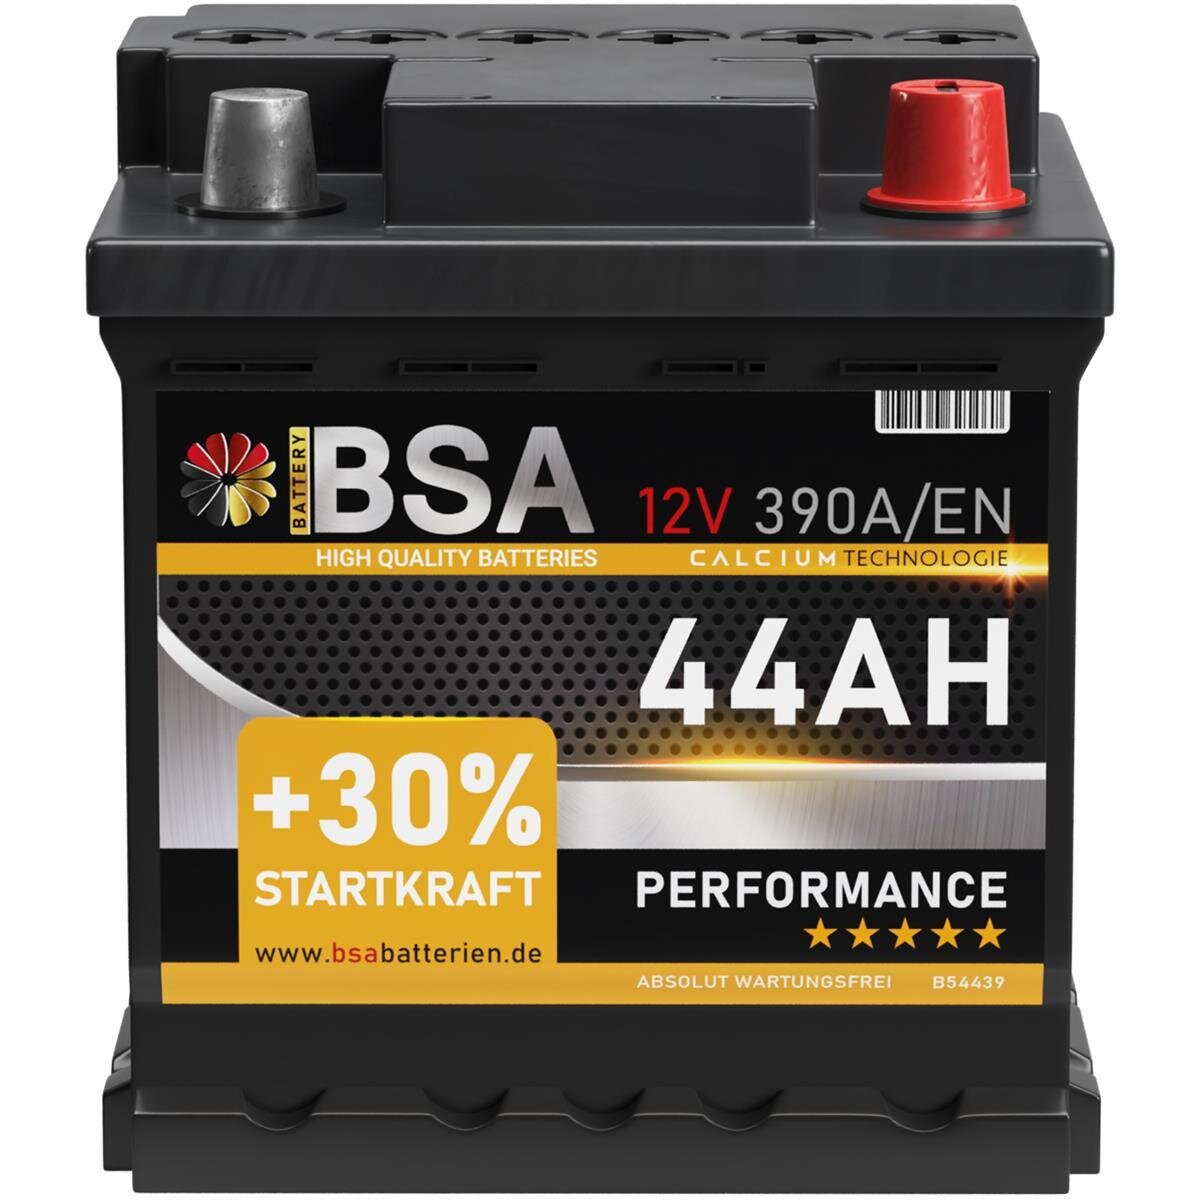 https://www.winnerbatterien.de/media/image/product/7848/lg/bsa-performance-autobatterie-44ah-12v.jpg